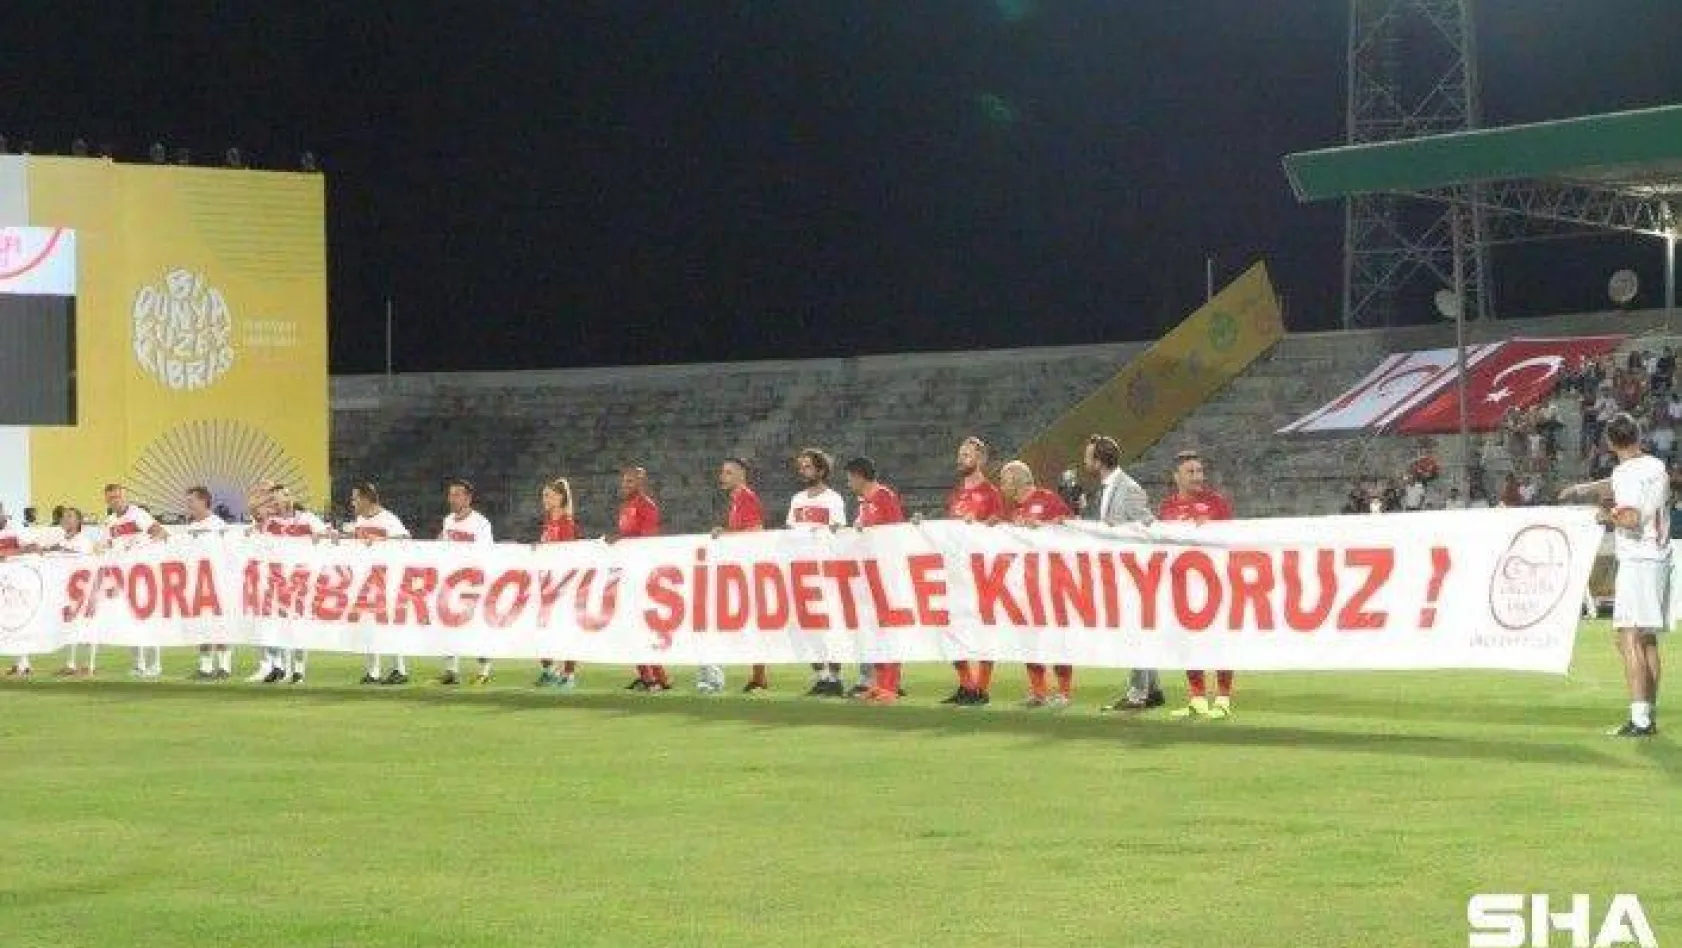 Kıbrıs'ta şöhretler maçında dünyaya mesaj: &quotSporda ambargoya hayır"